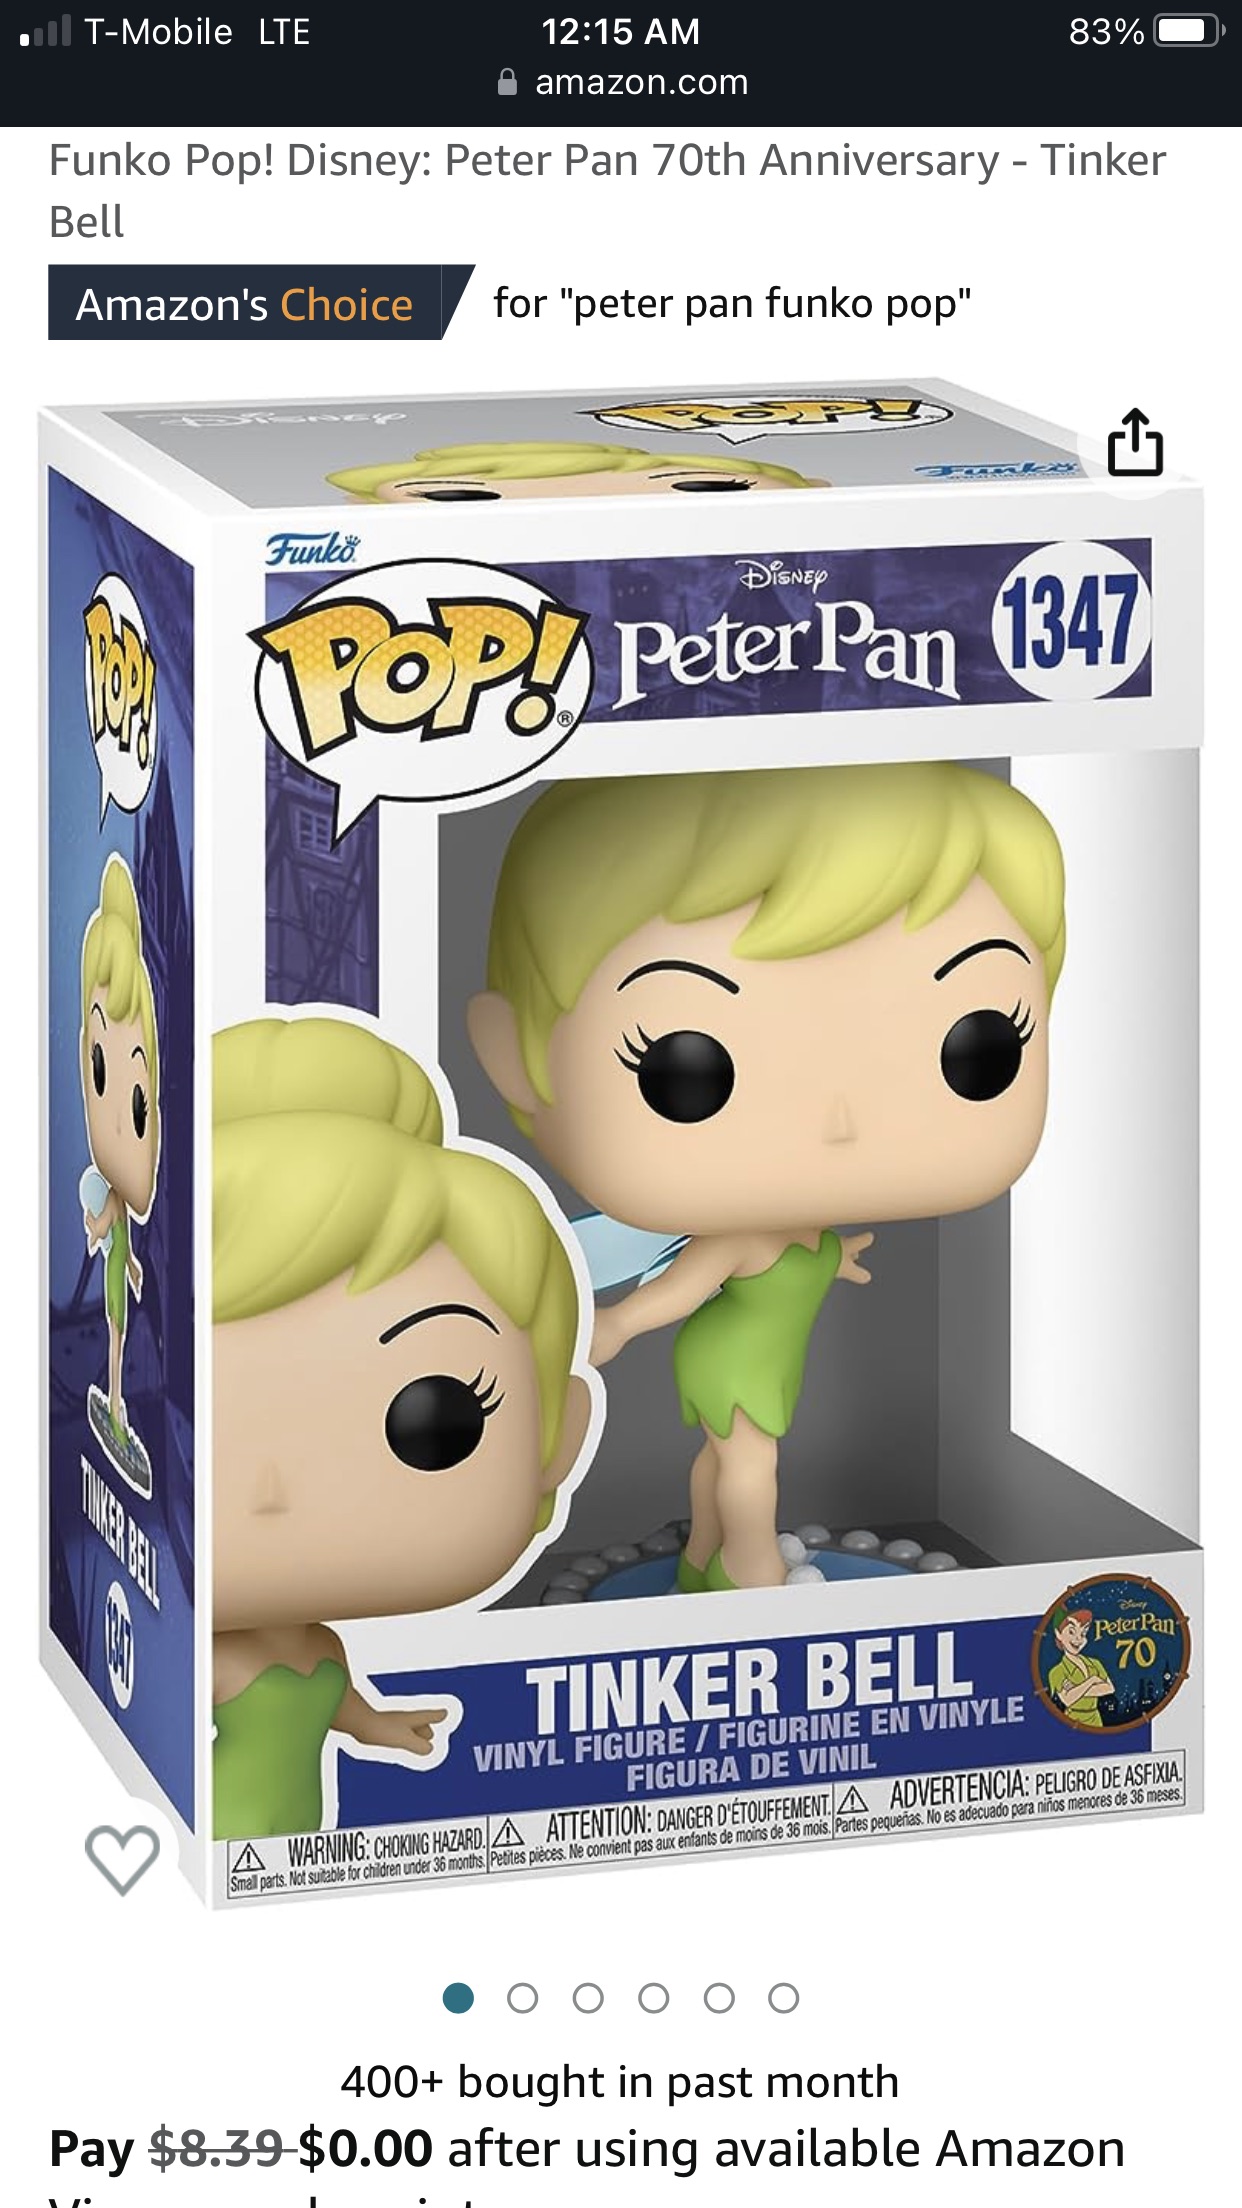 Amazon.com: Funko Pop! Disney: Peter Pan 70th Anniversary - Tinker Bell : Toys & Games